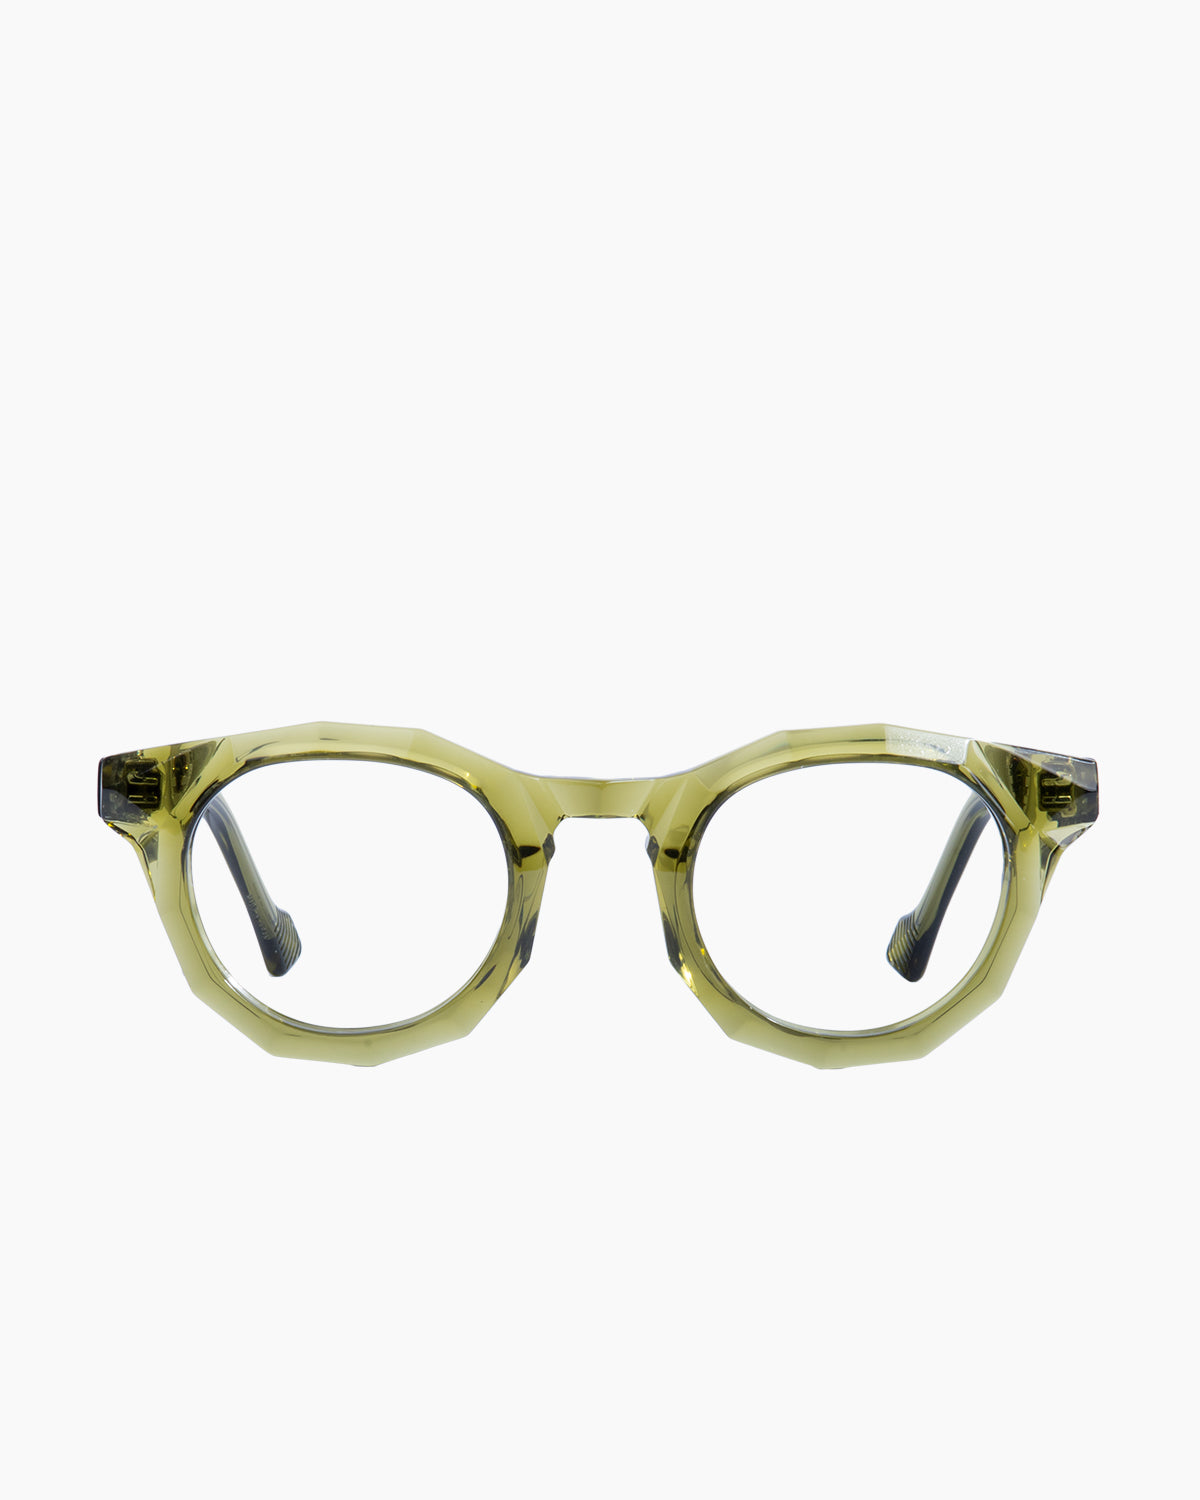 Yohji Yamamoto - Look010 - a003 | glasses bar:  Marie-Sophie Dion